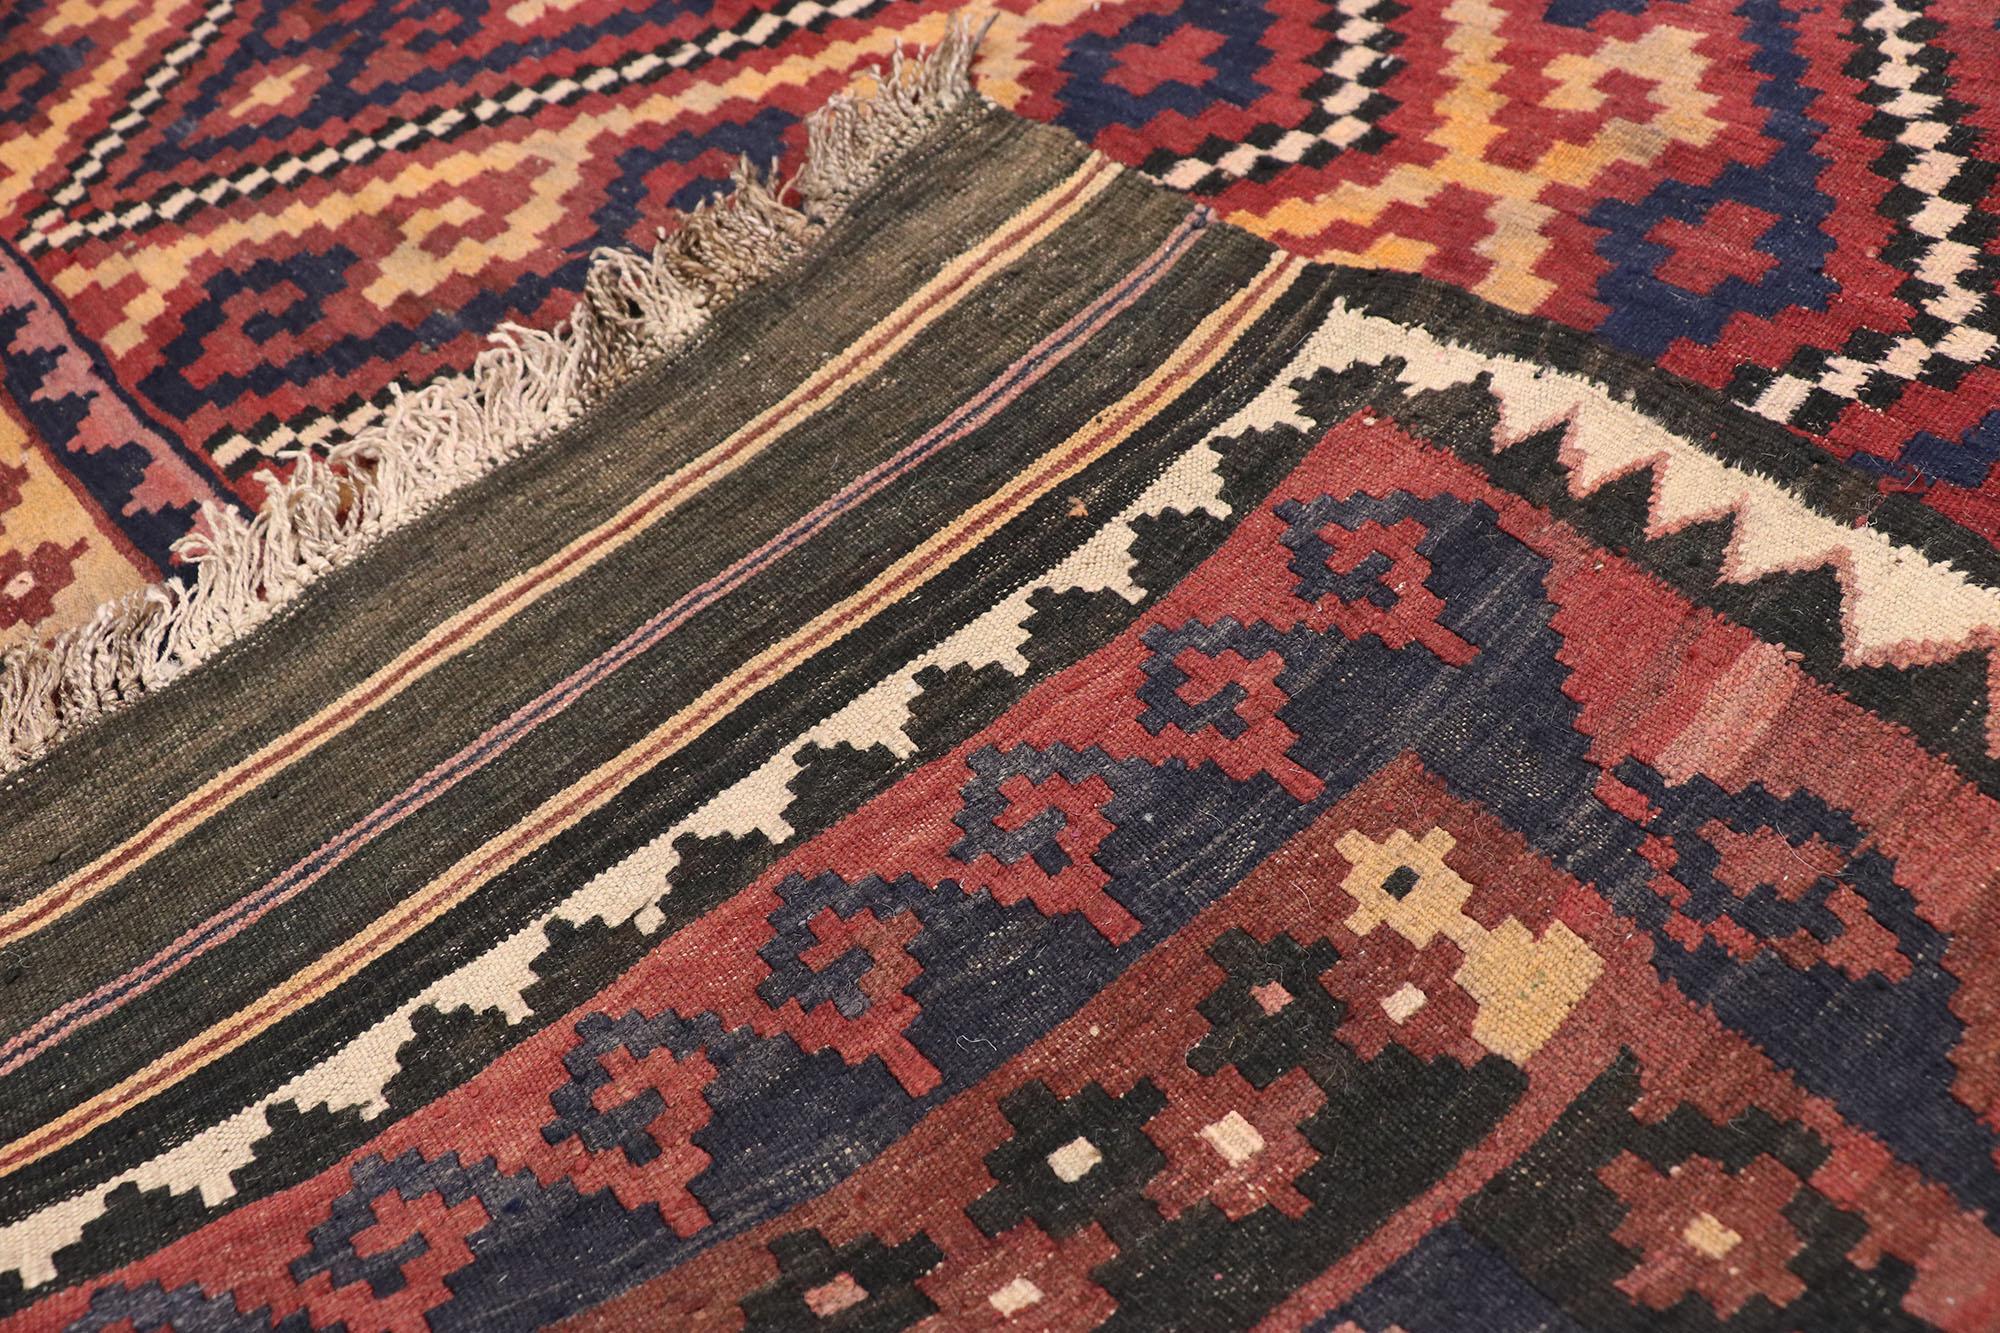 20th Century Rustic Vintage Afghan Kilim Rug, Southwest Desert Meets Contemporary Santa Fe For Sale